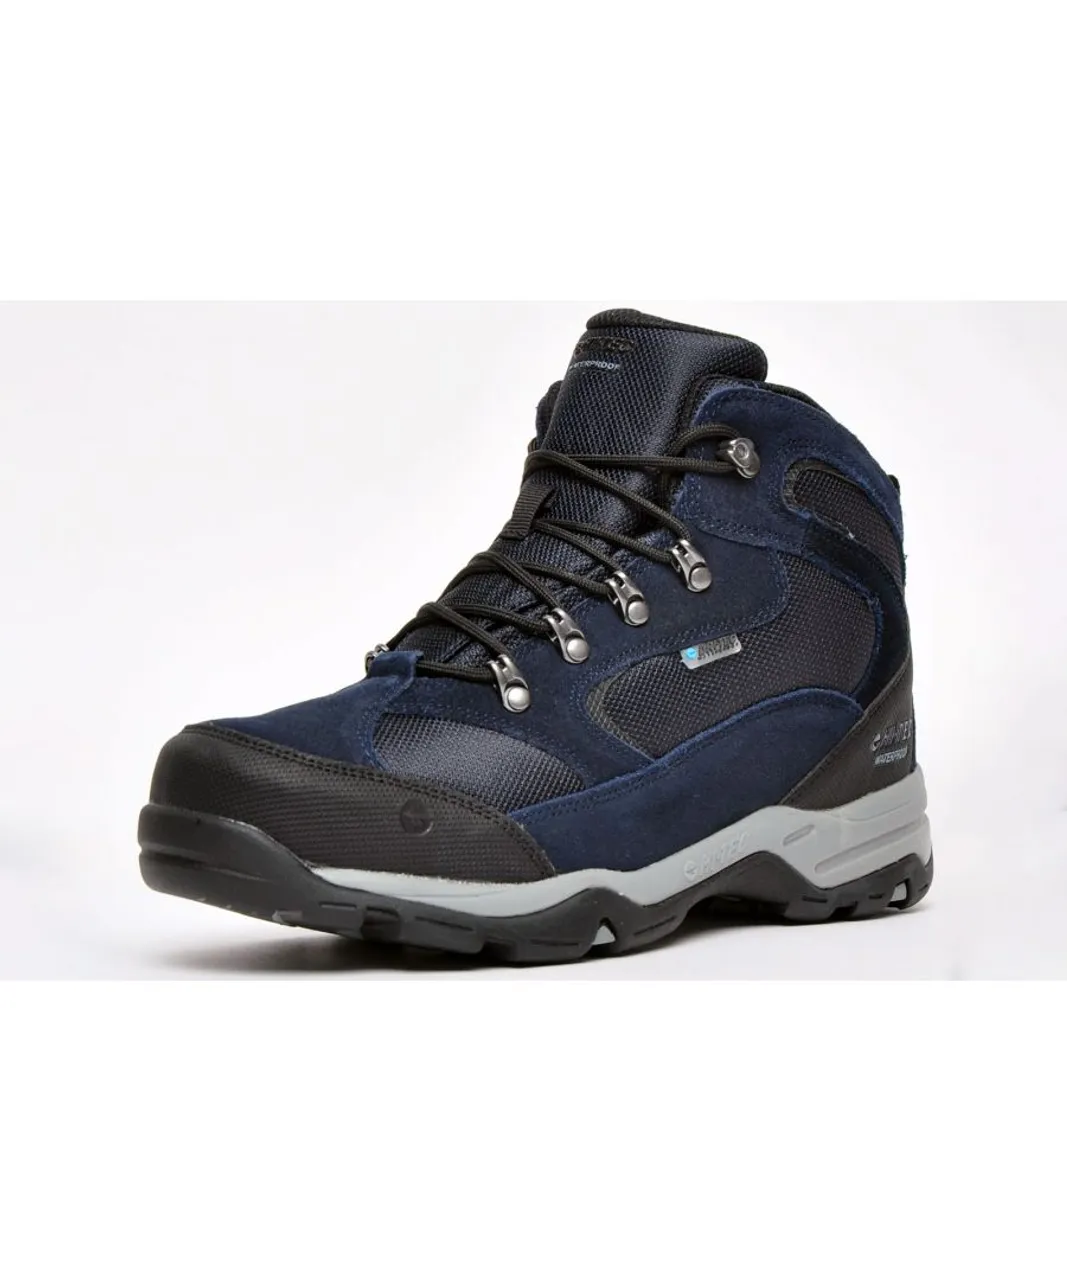 Hi-Tec Storm Mens Hiking Boot - Navy Leather